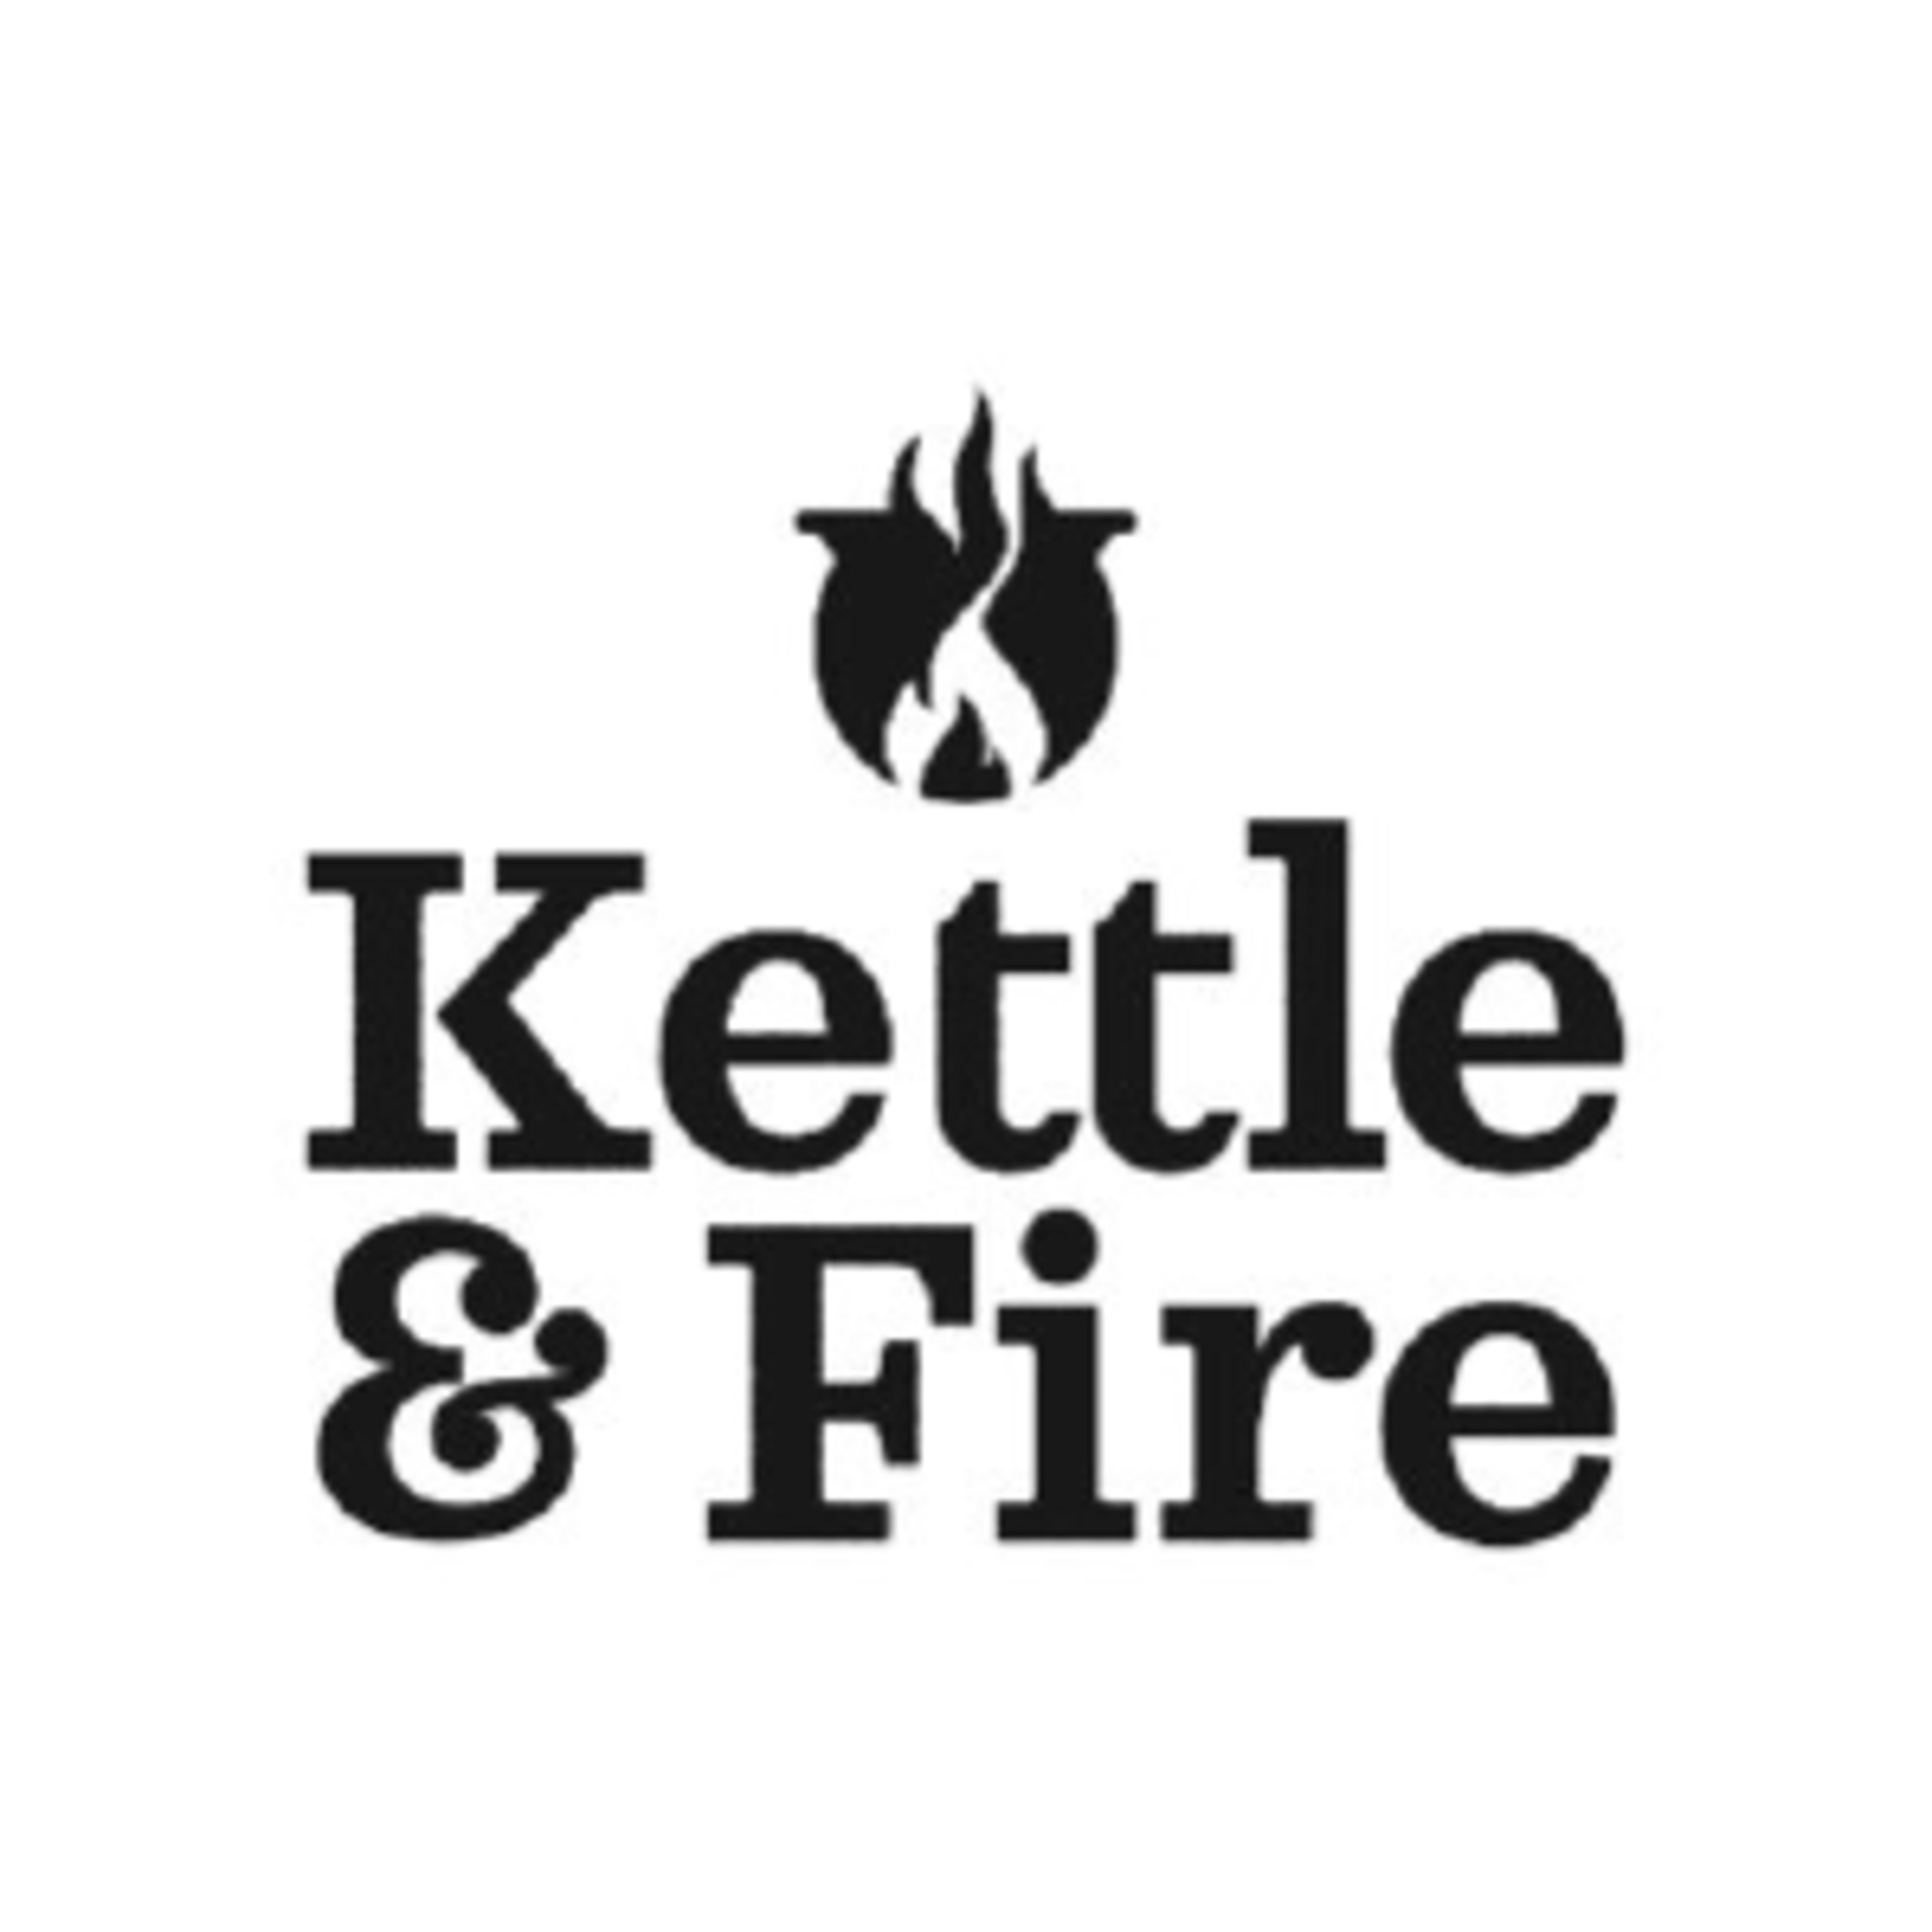 Kettle & FireCode